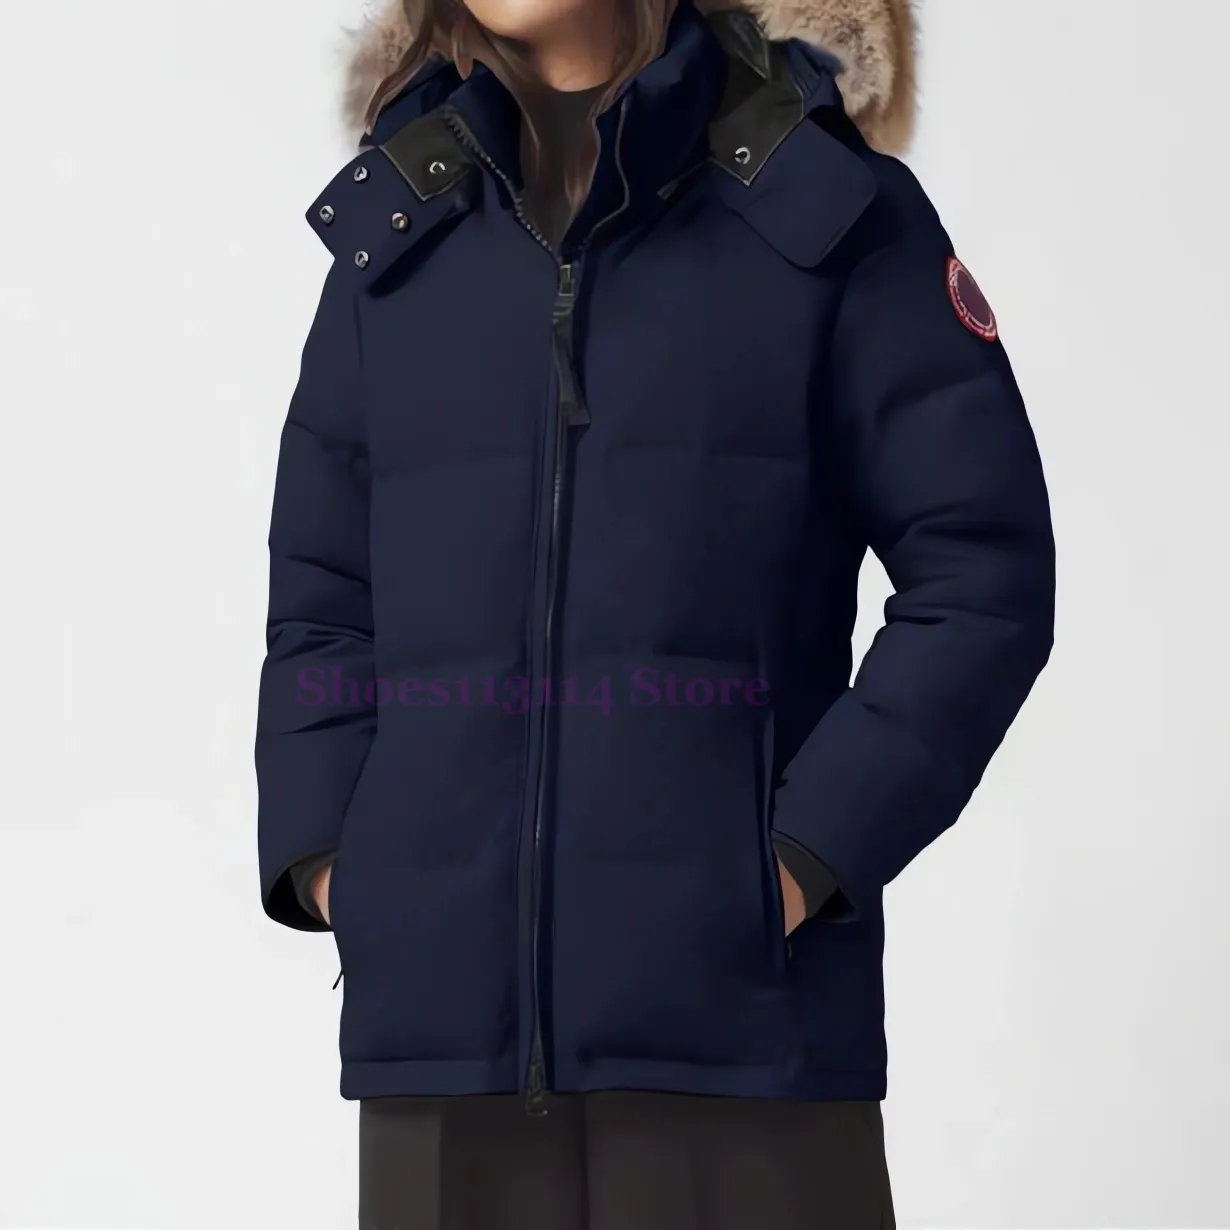 Chaquetas canadienses para mujer gansos damas Canadá invierno cálido abrigo acolchado al aire libre parkas con capucha moda chaqueta de plumón de ganso ropa de abrigo clásica de lujo gruesa 3OD5